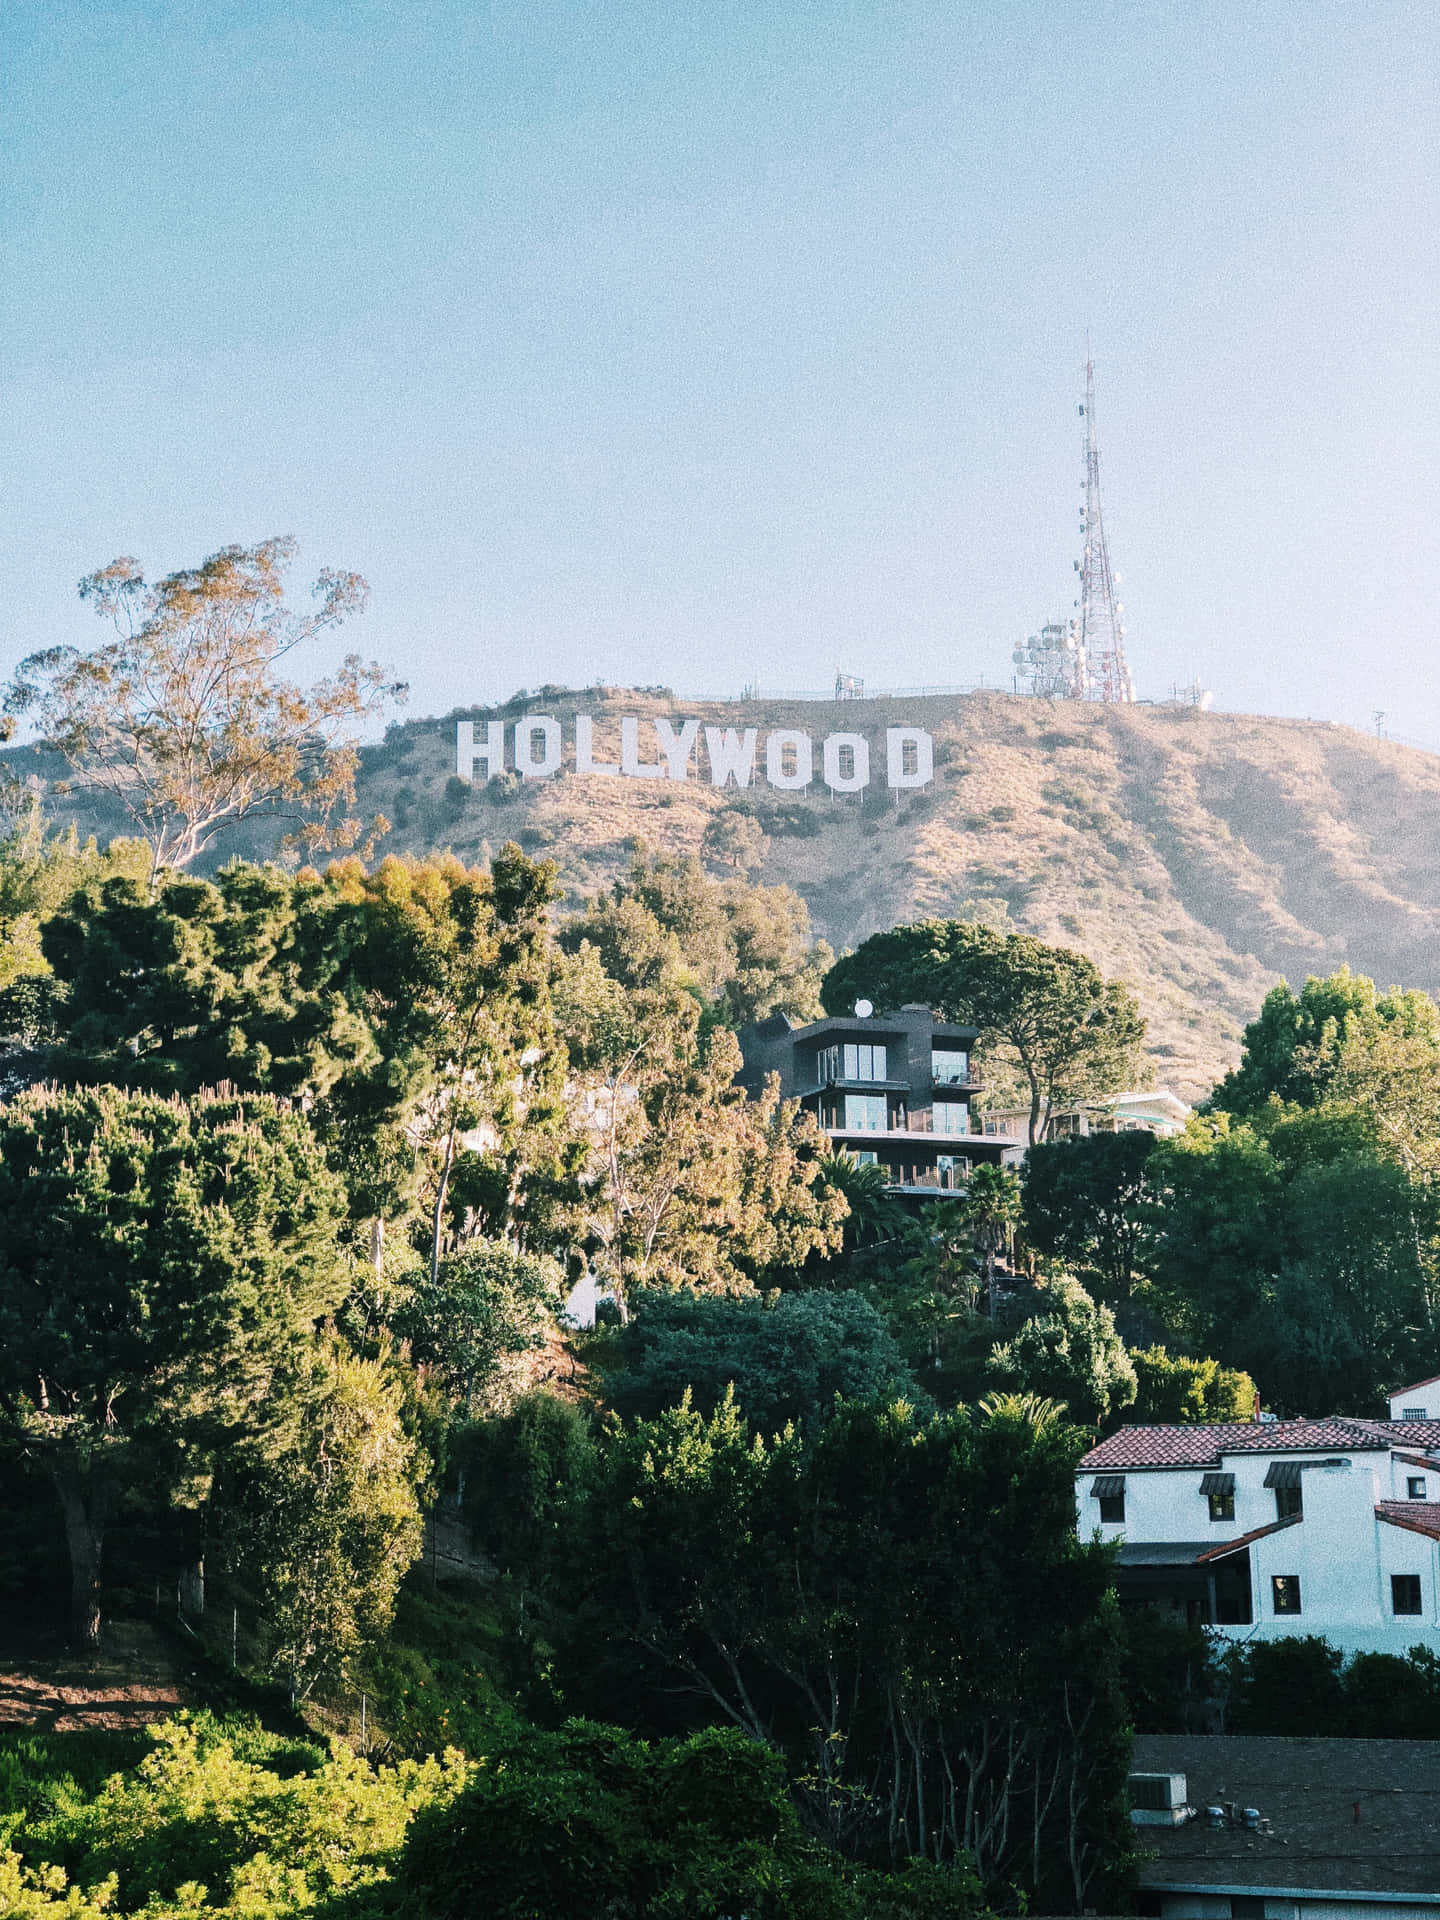 Hollywood Background Near Santa Monica Boulevard